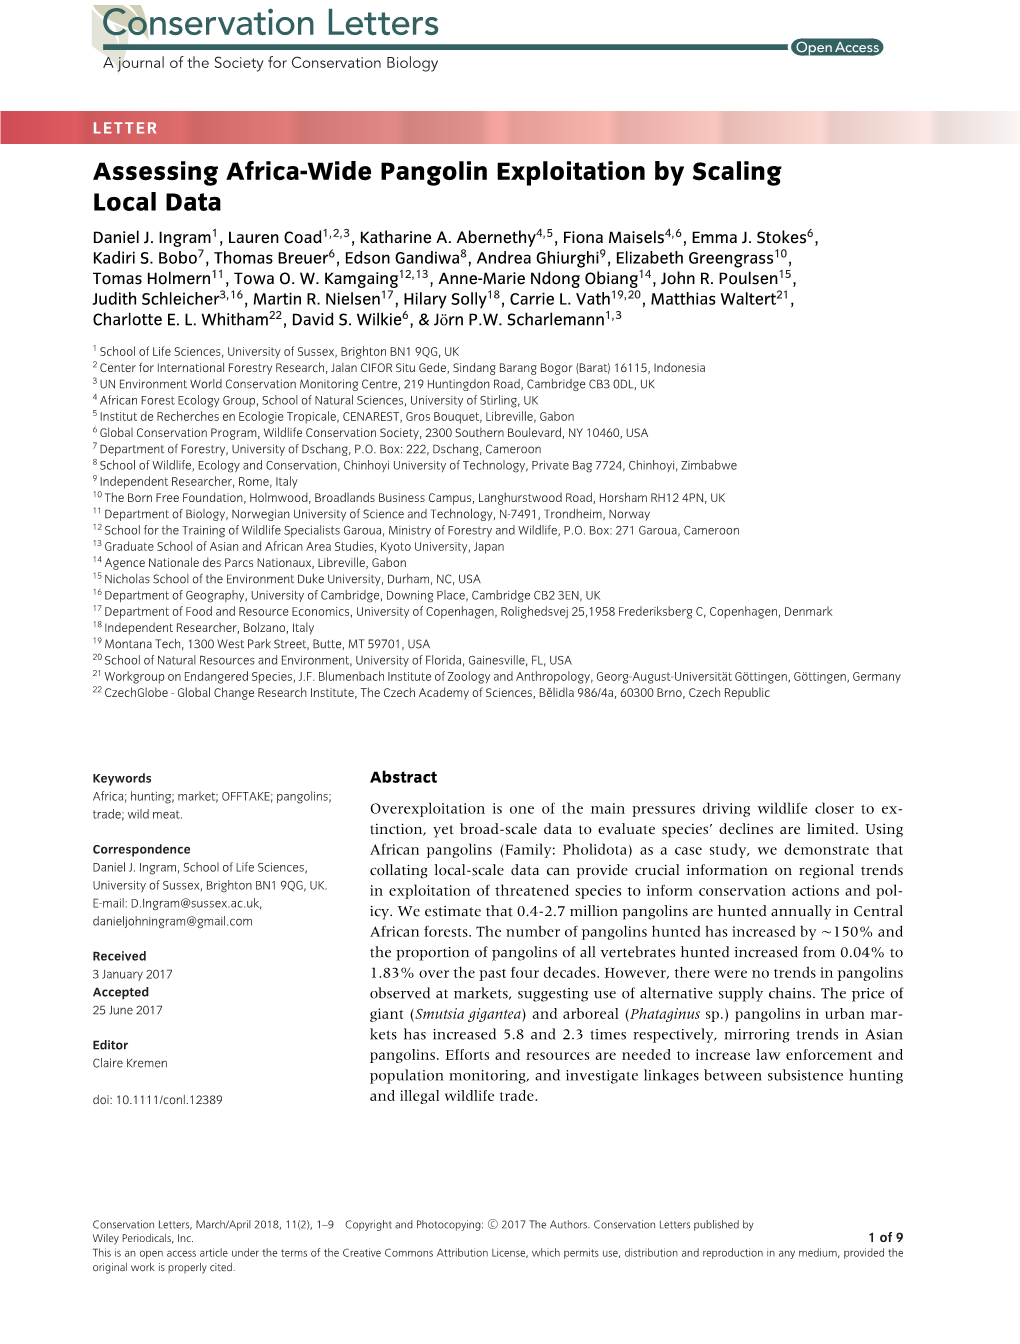 Wide Pangolin Exploitation by Scaling Local Data Daniel J